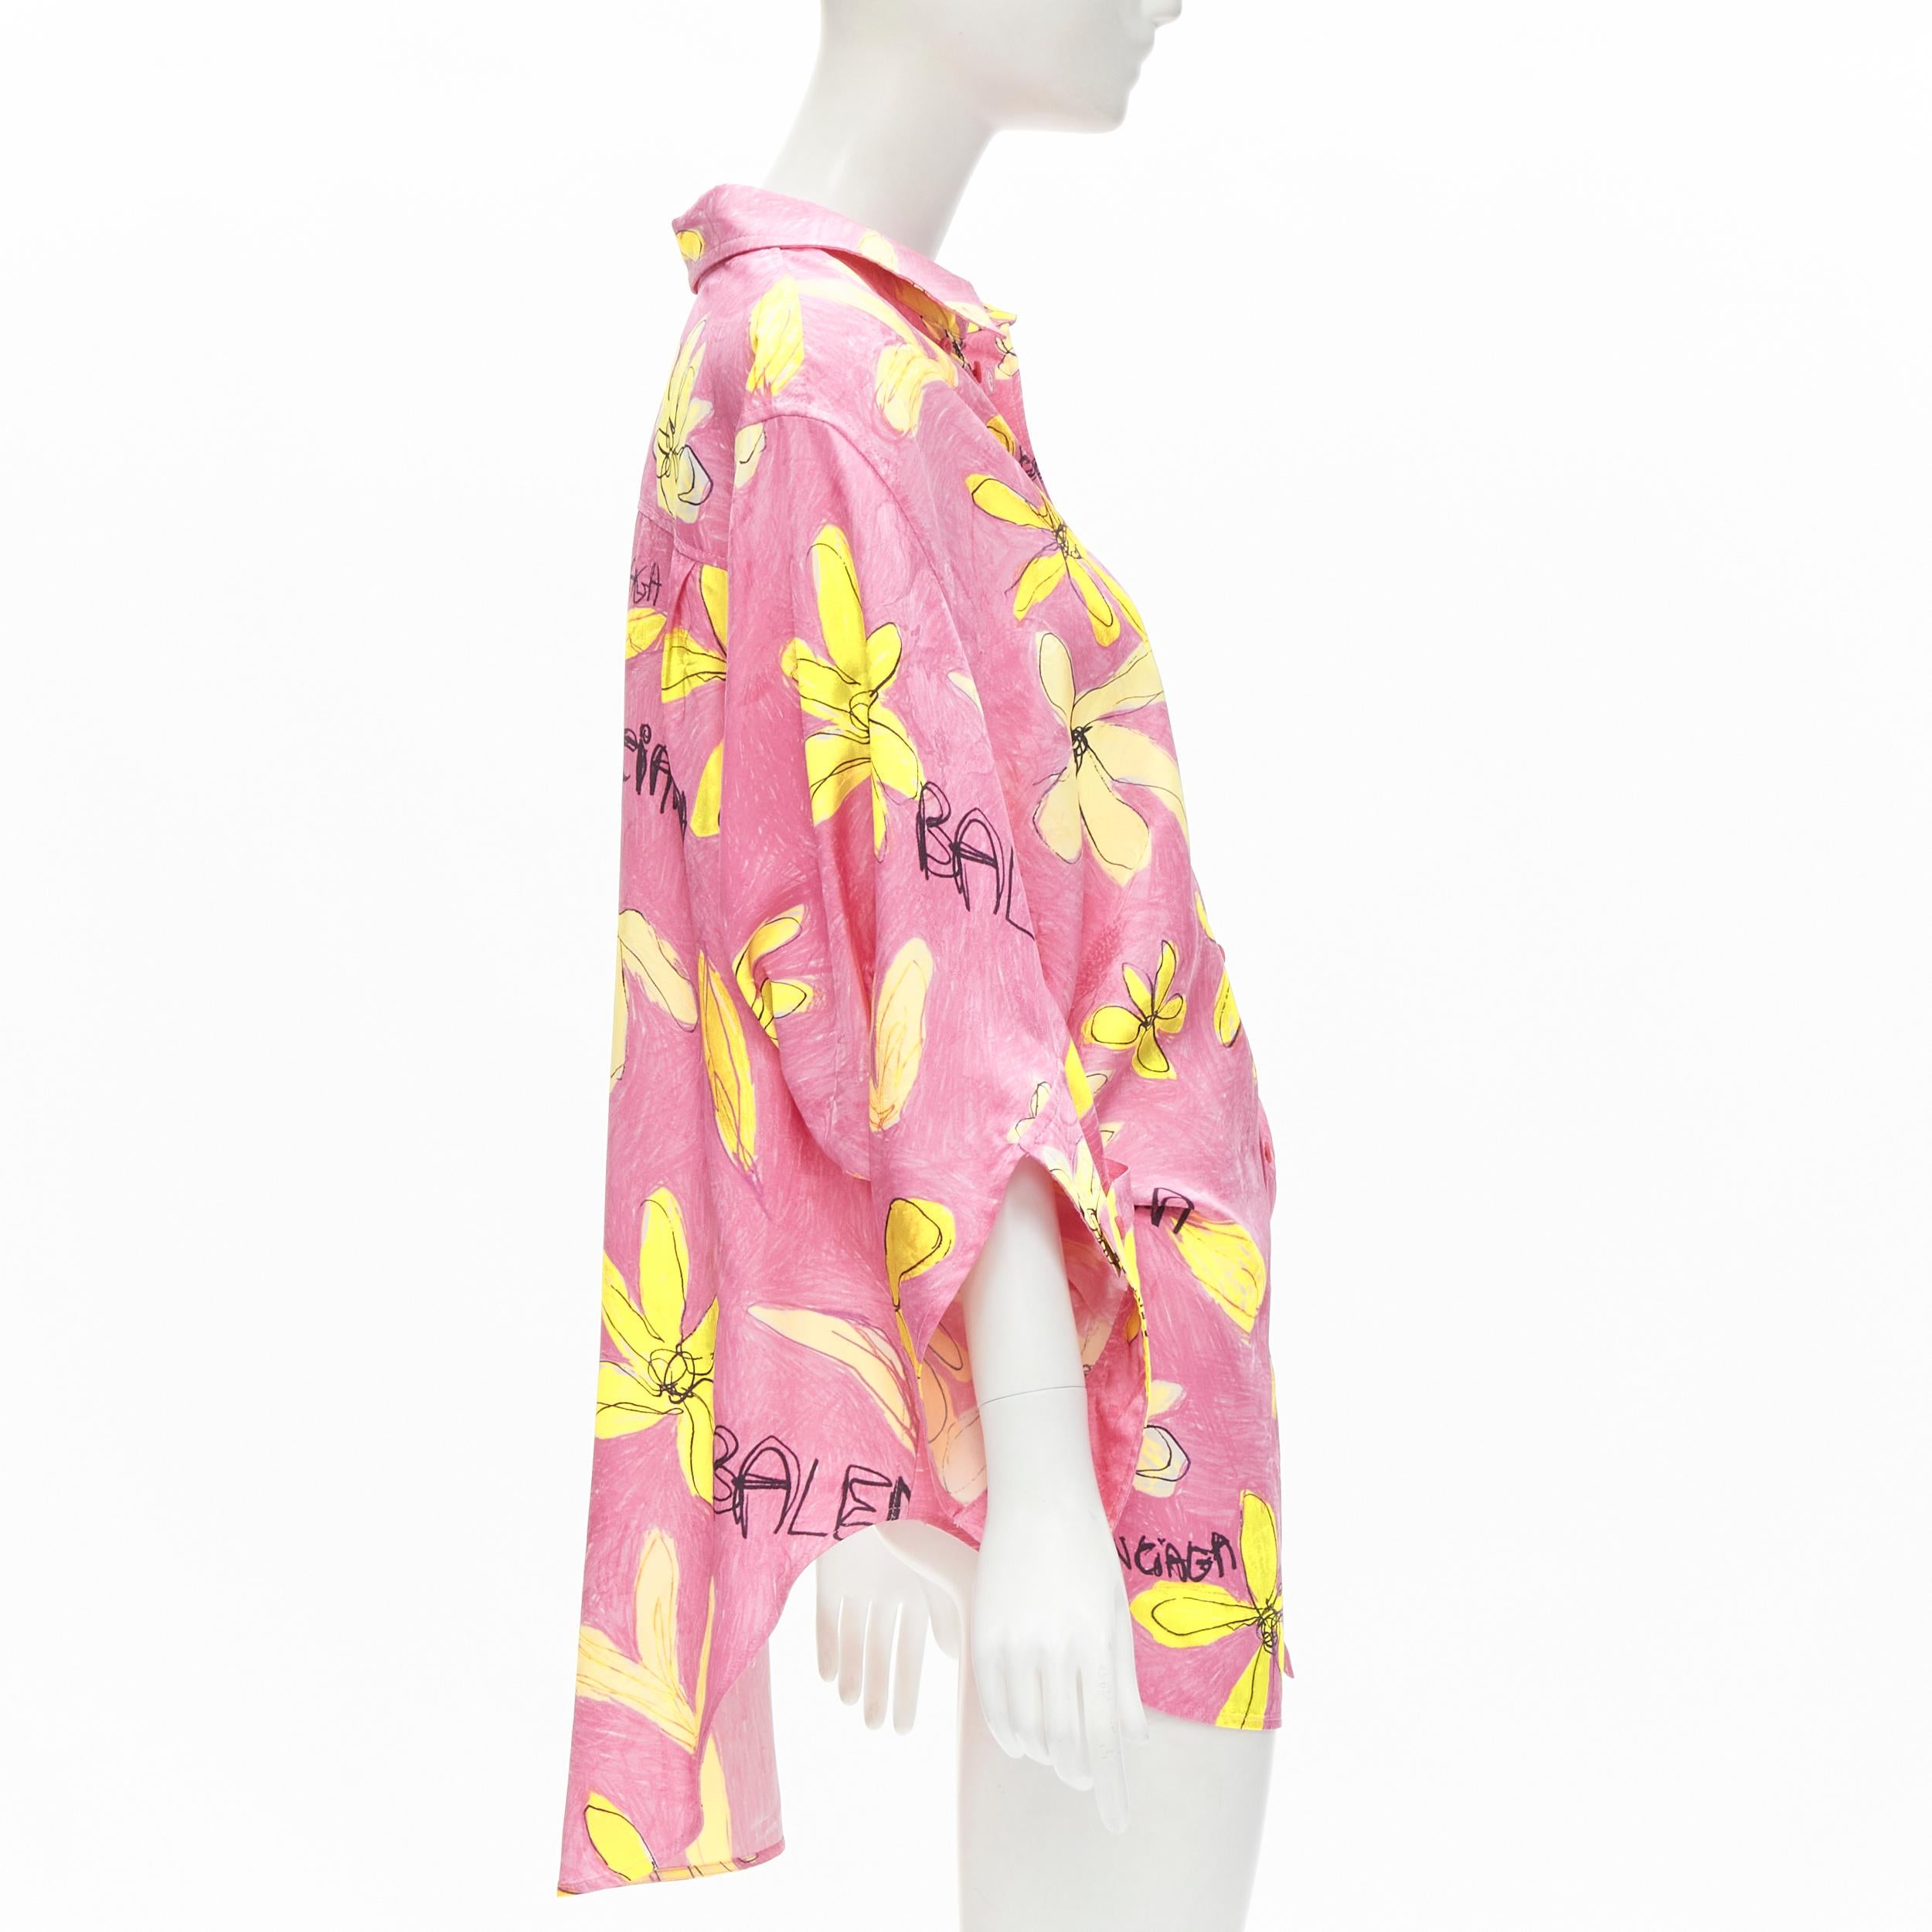 BALENCIAGA 2021 Julian Farade pink yellow floral deconstructed shirt FR34 XS 1